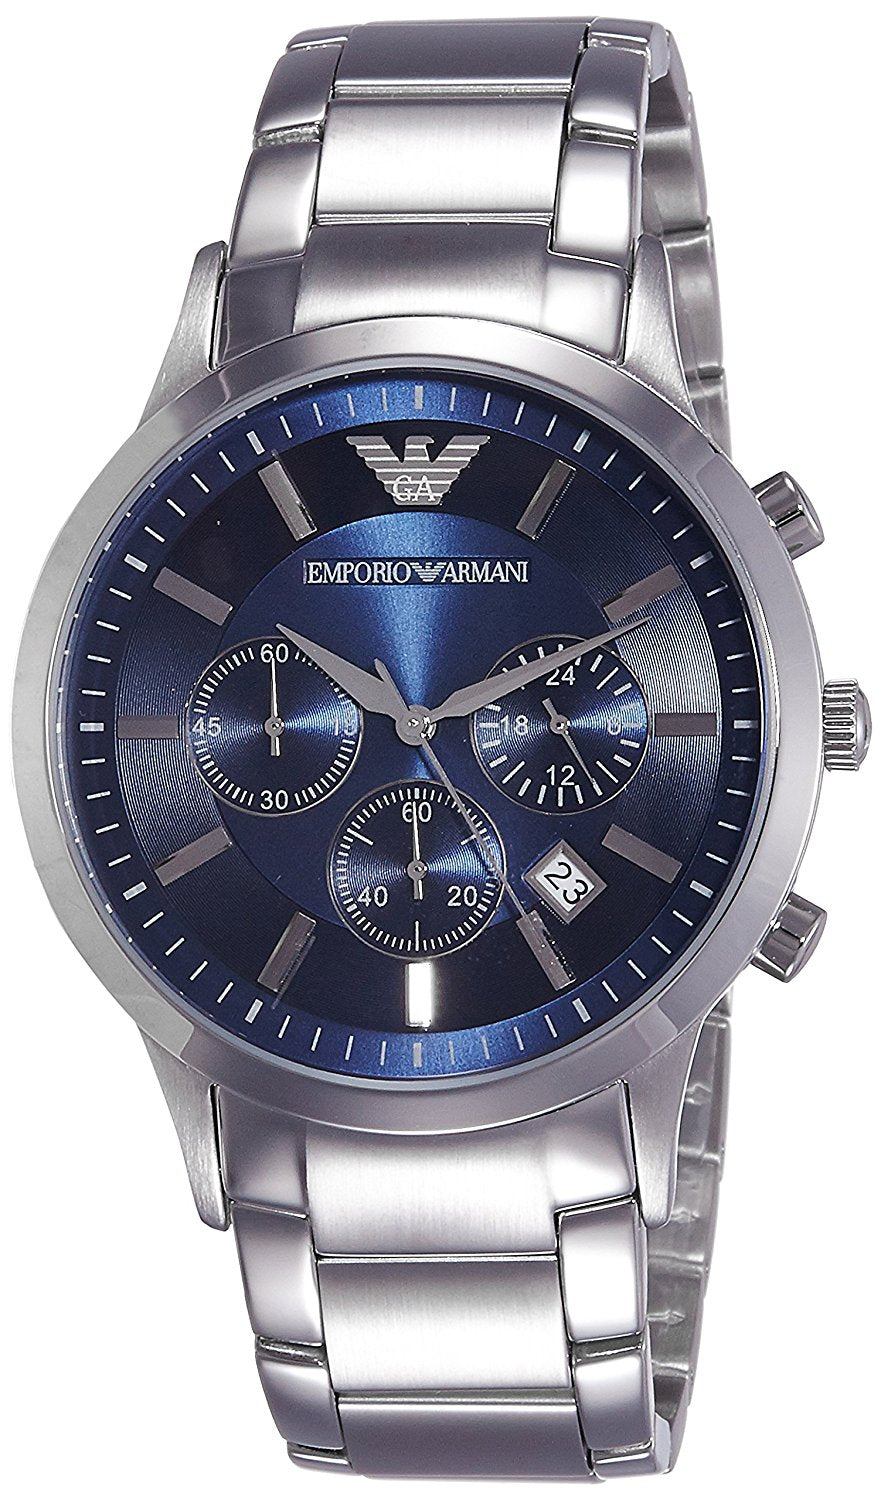 Men's Emporio Armani Classic Chronograph Watch